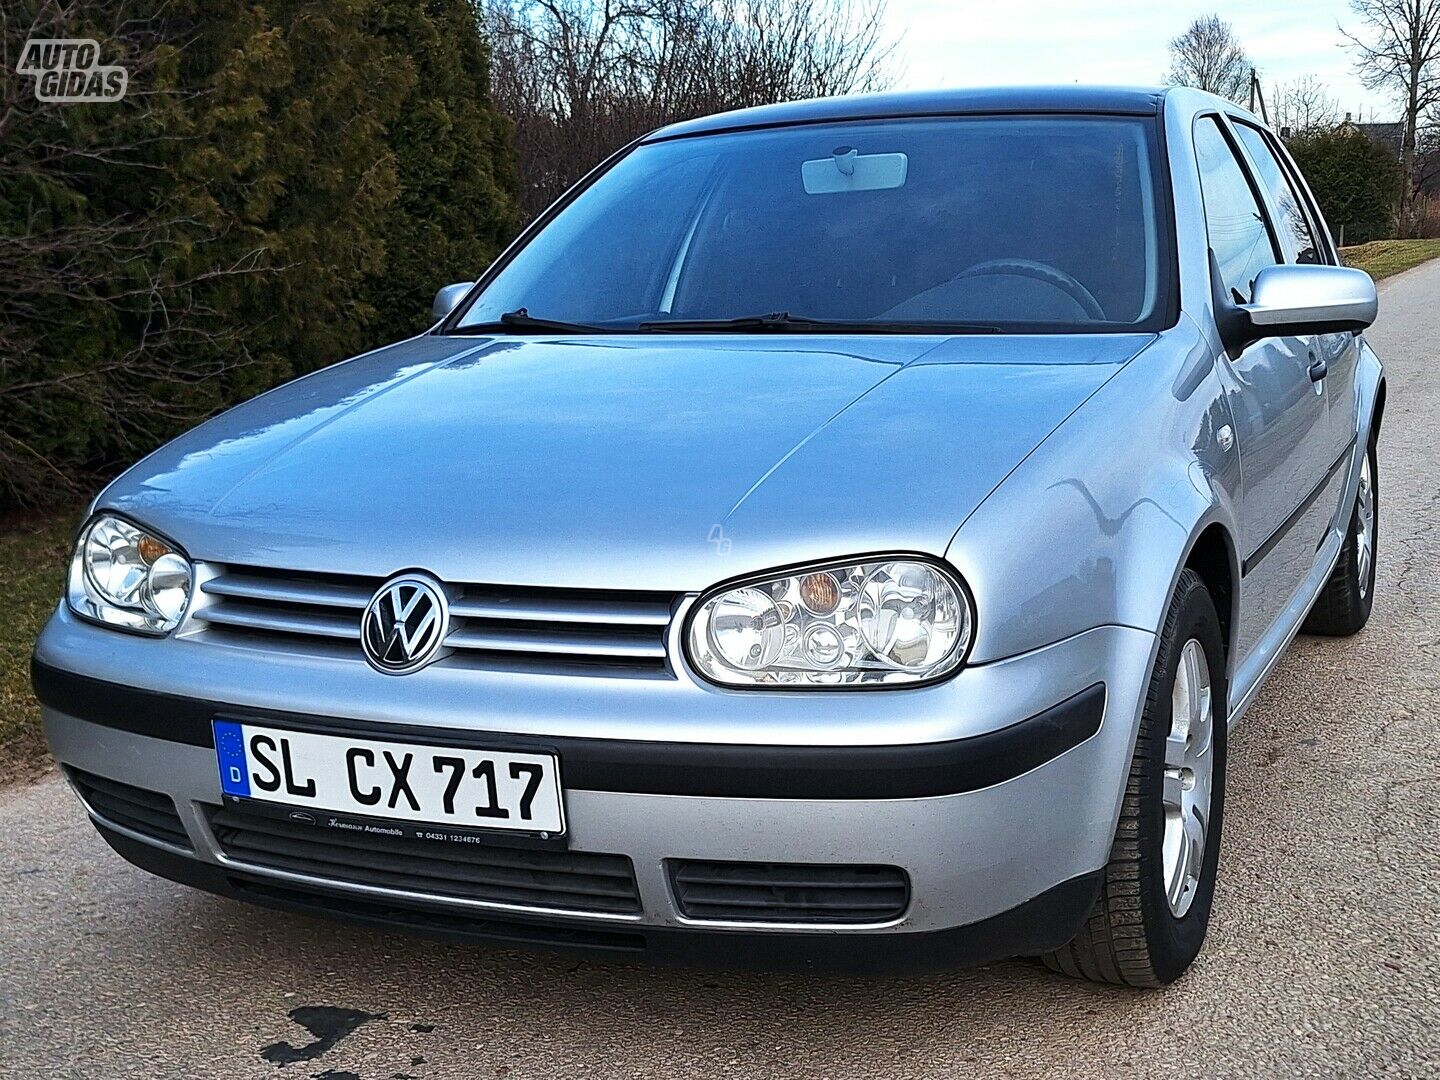 Volkswagen Golf TDI Basis 2003 m